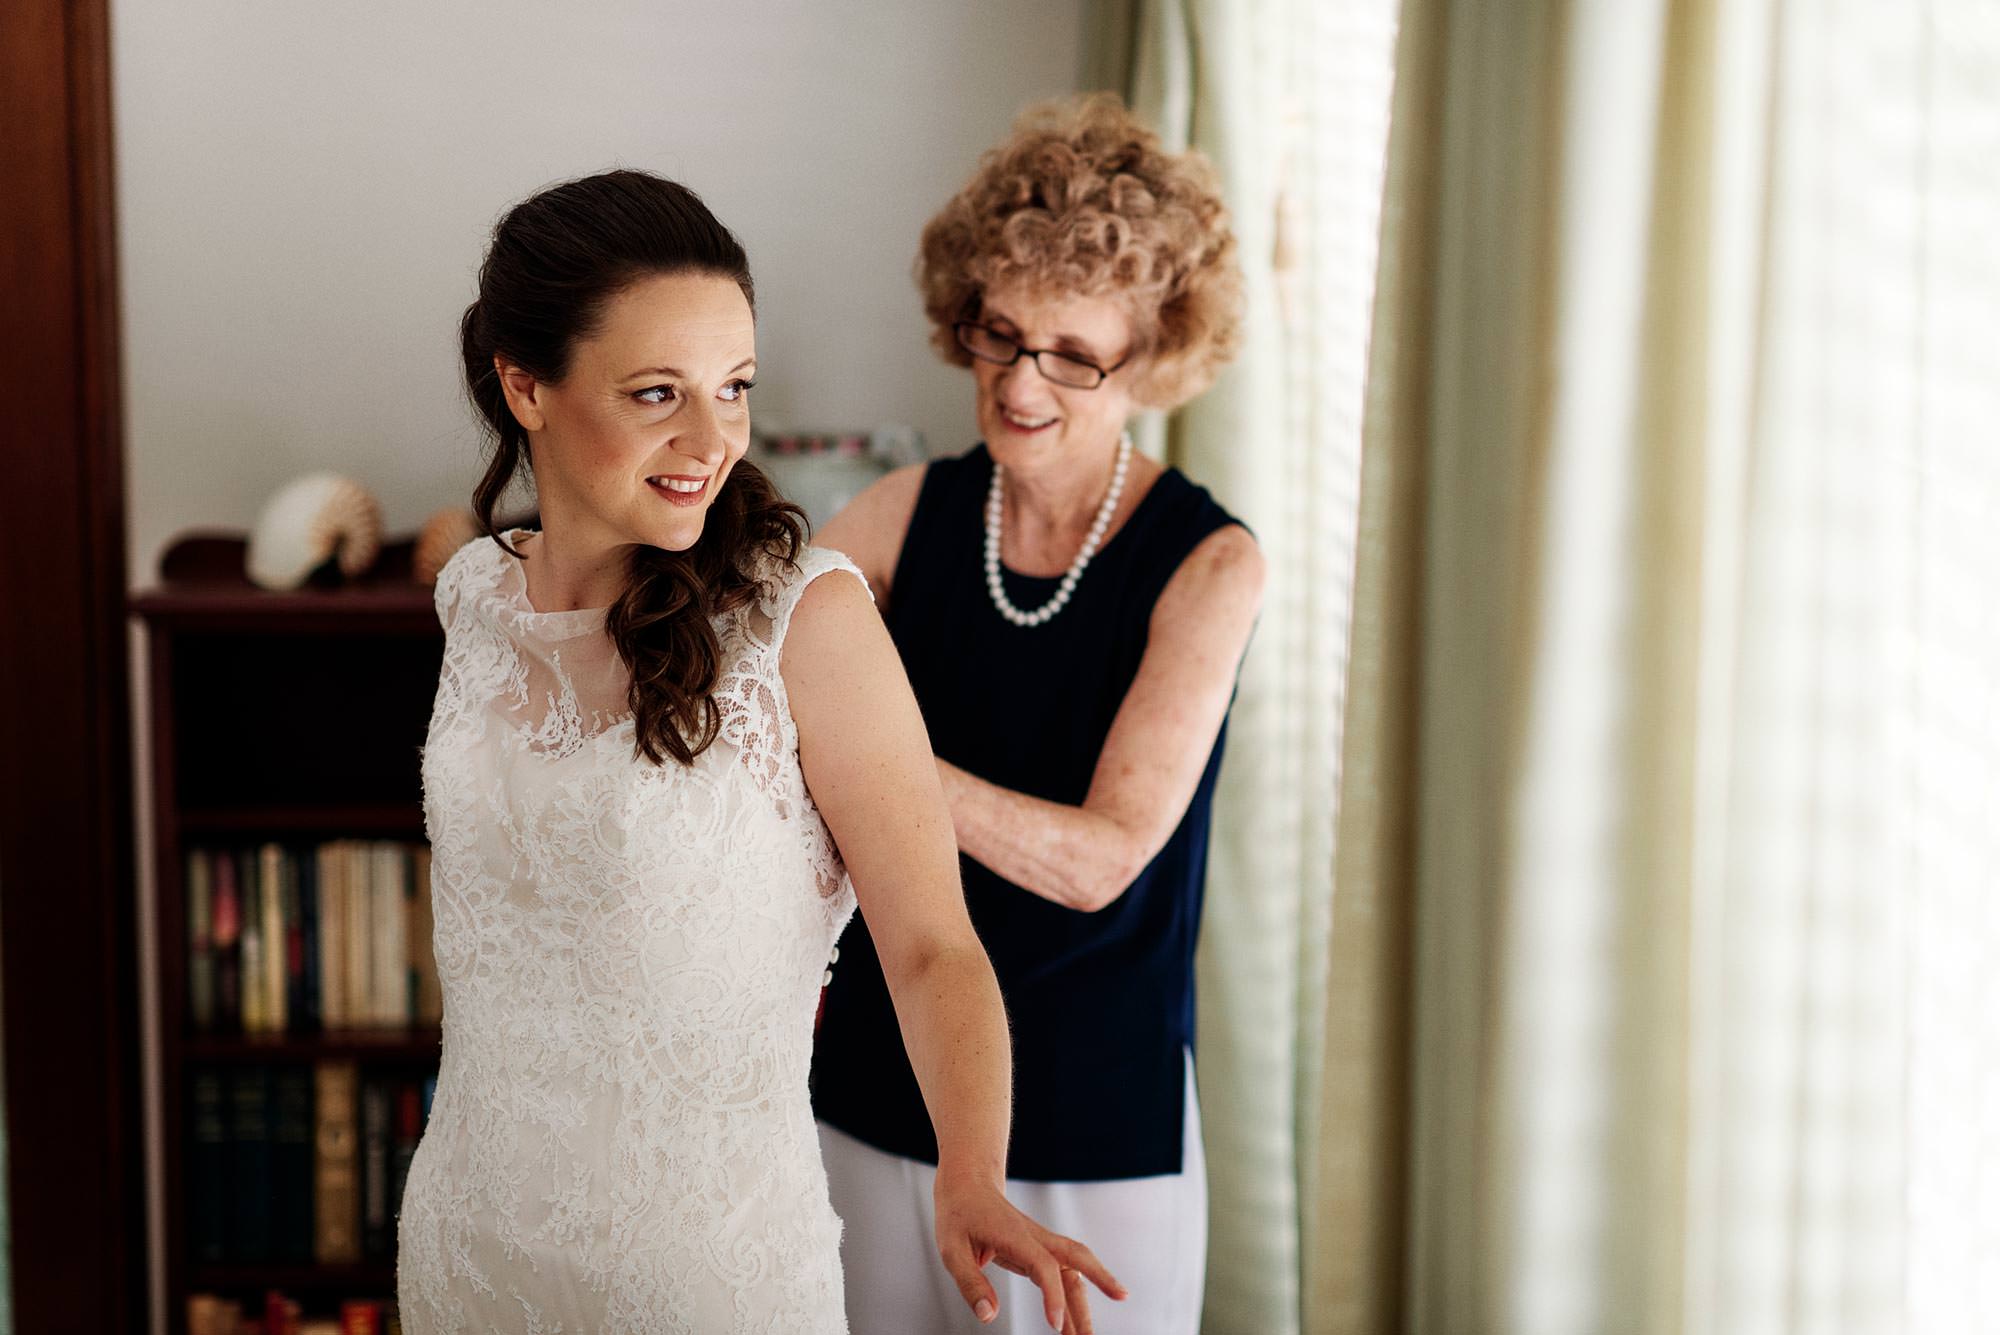 Mum helping daughter into wedding dress